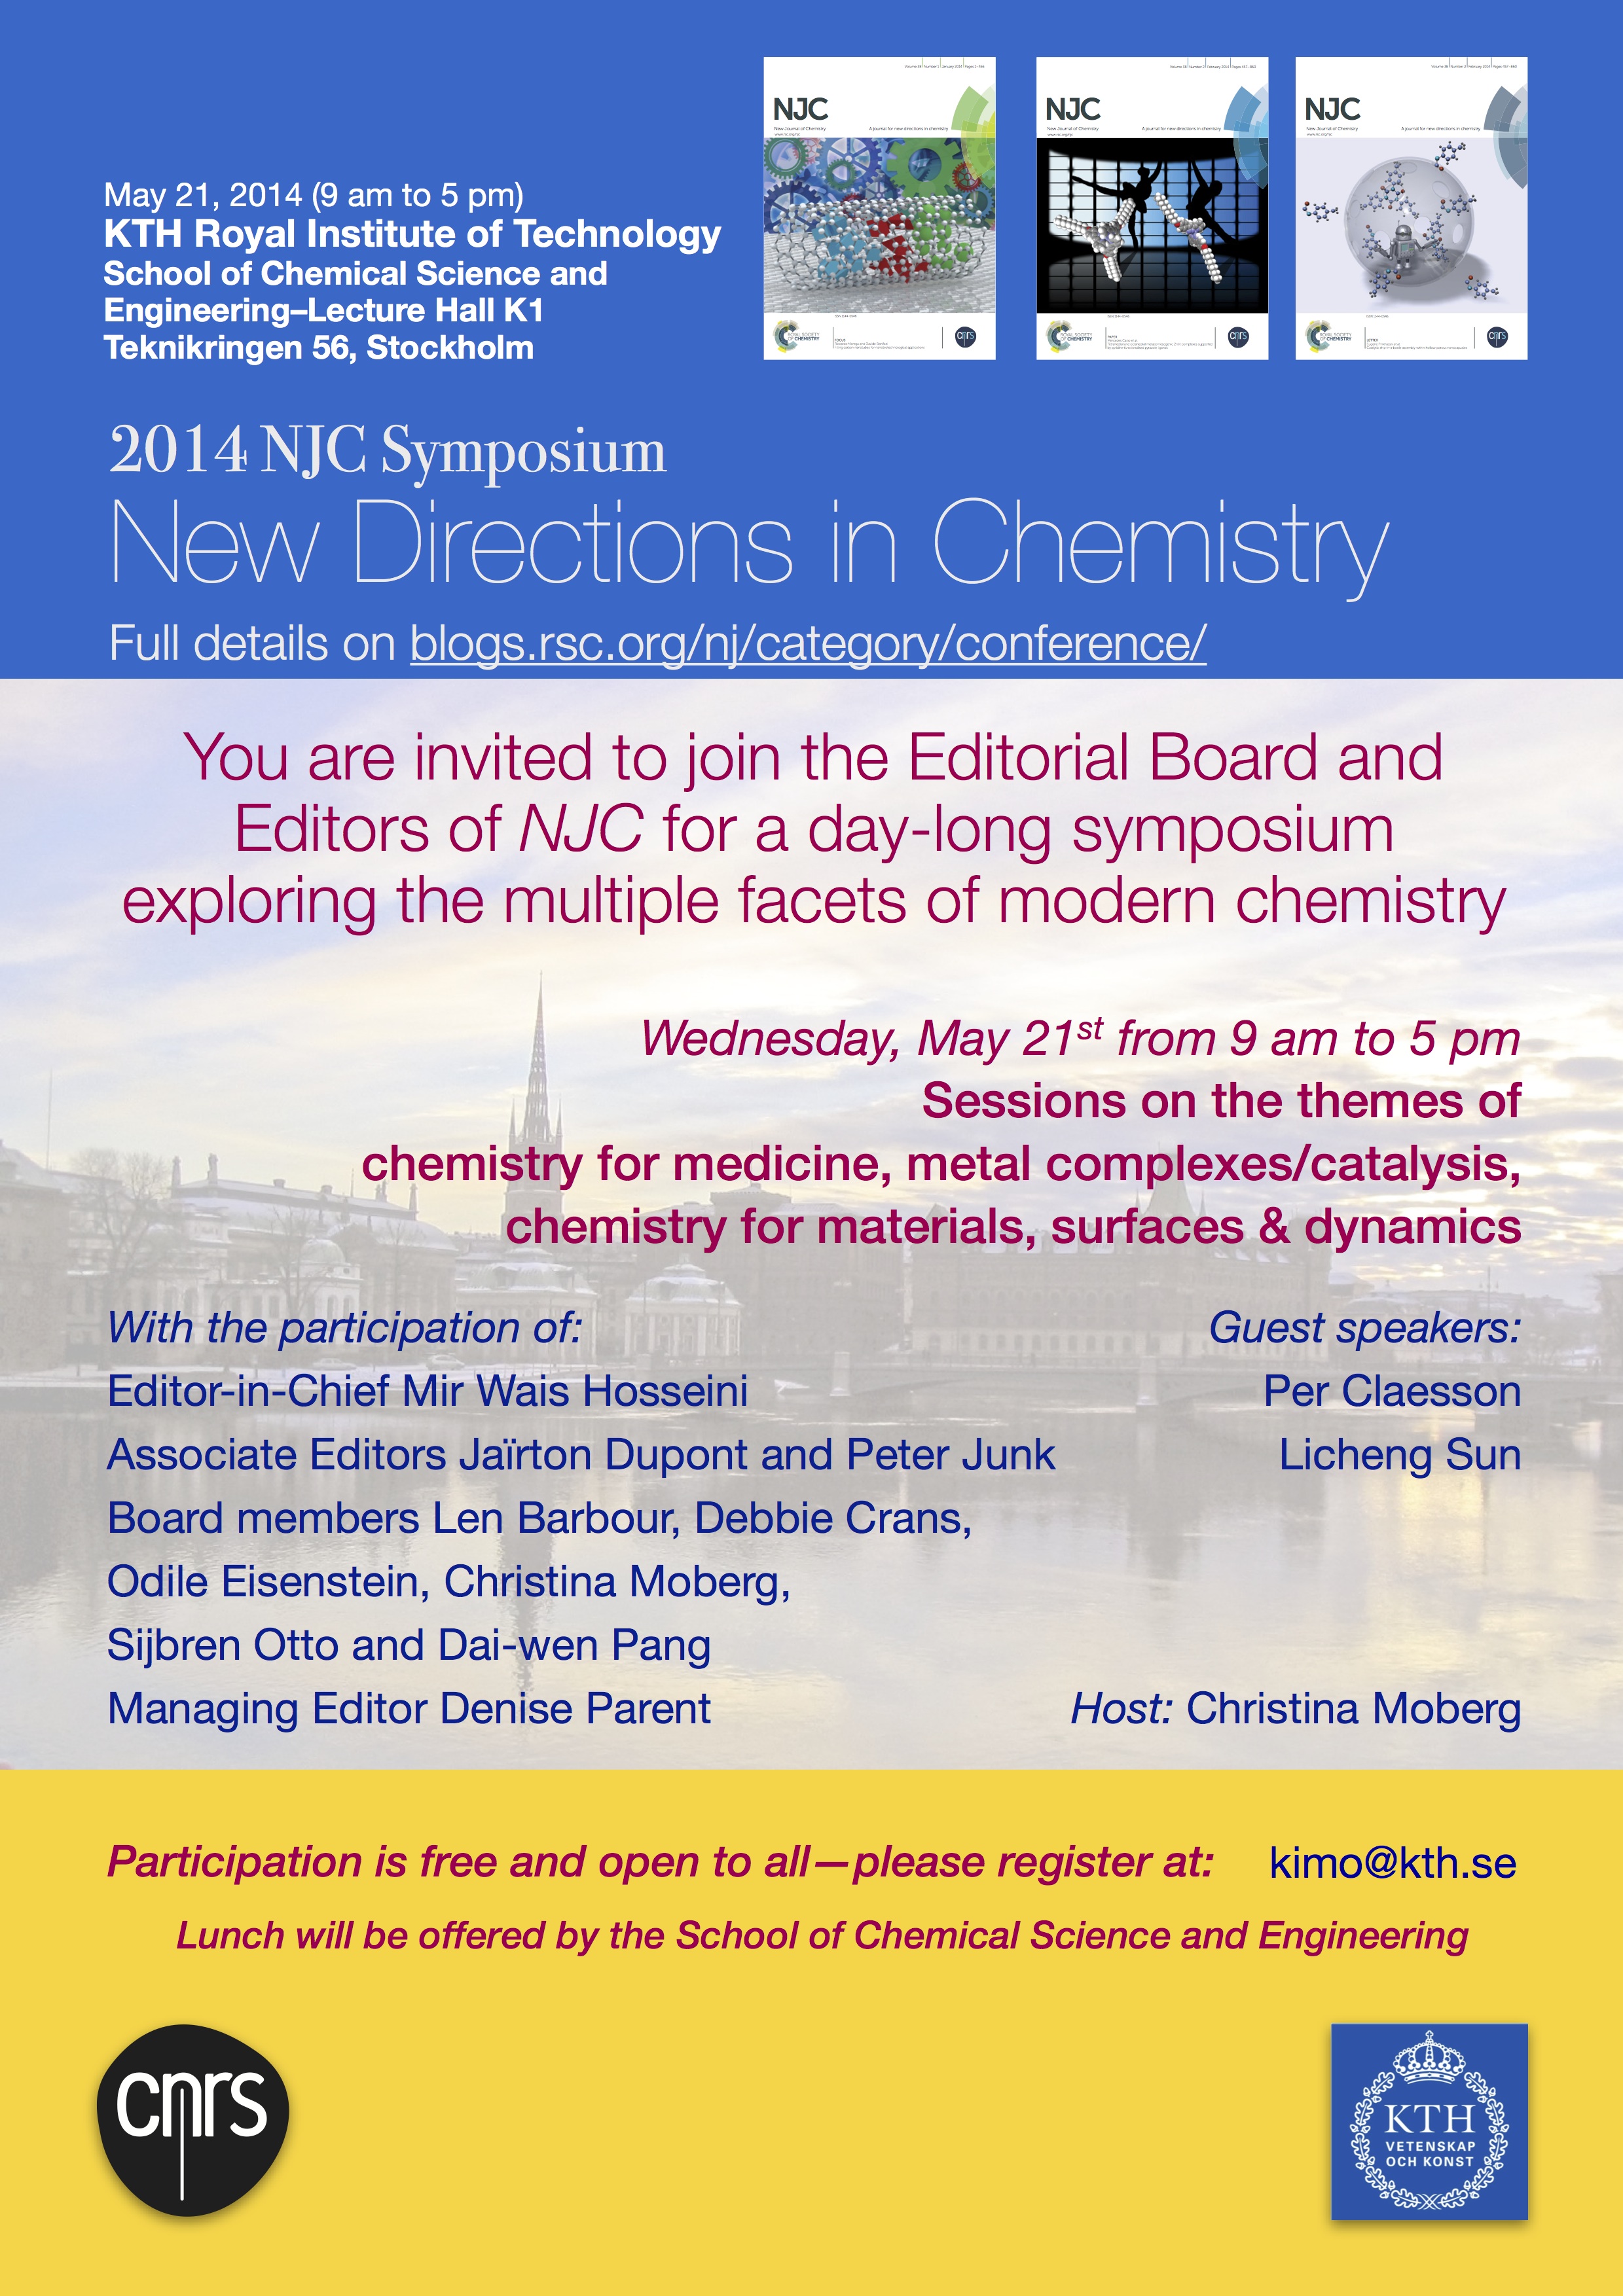 NJC Symposium at KTH on May 21, 2014